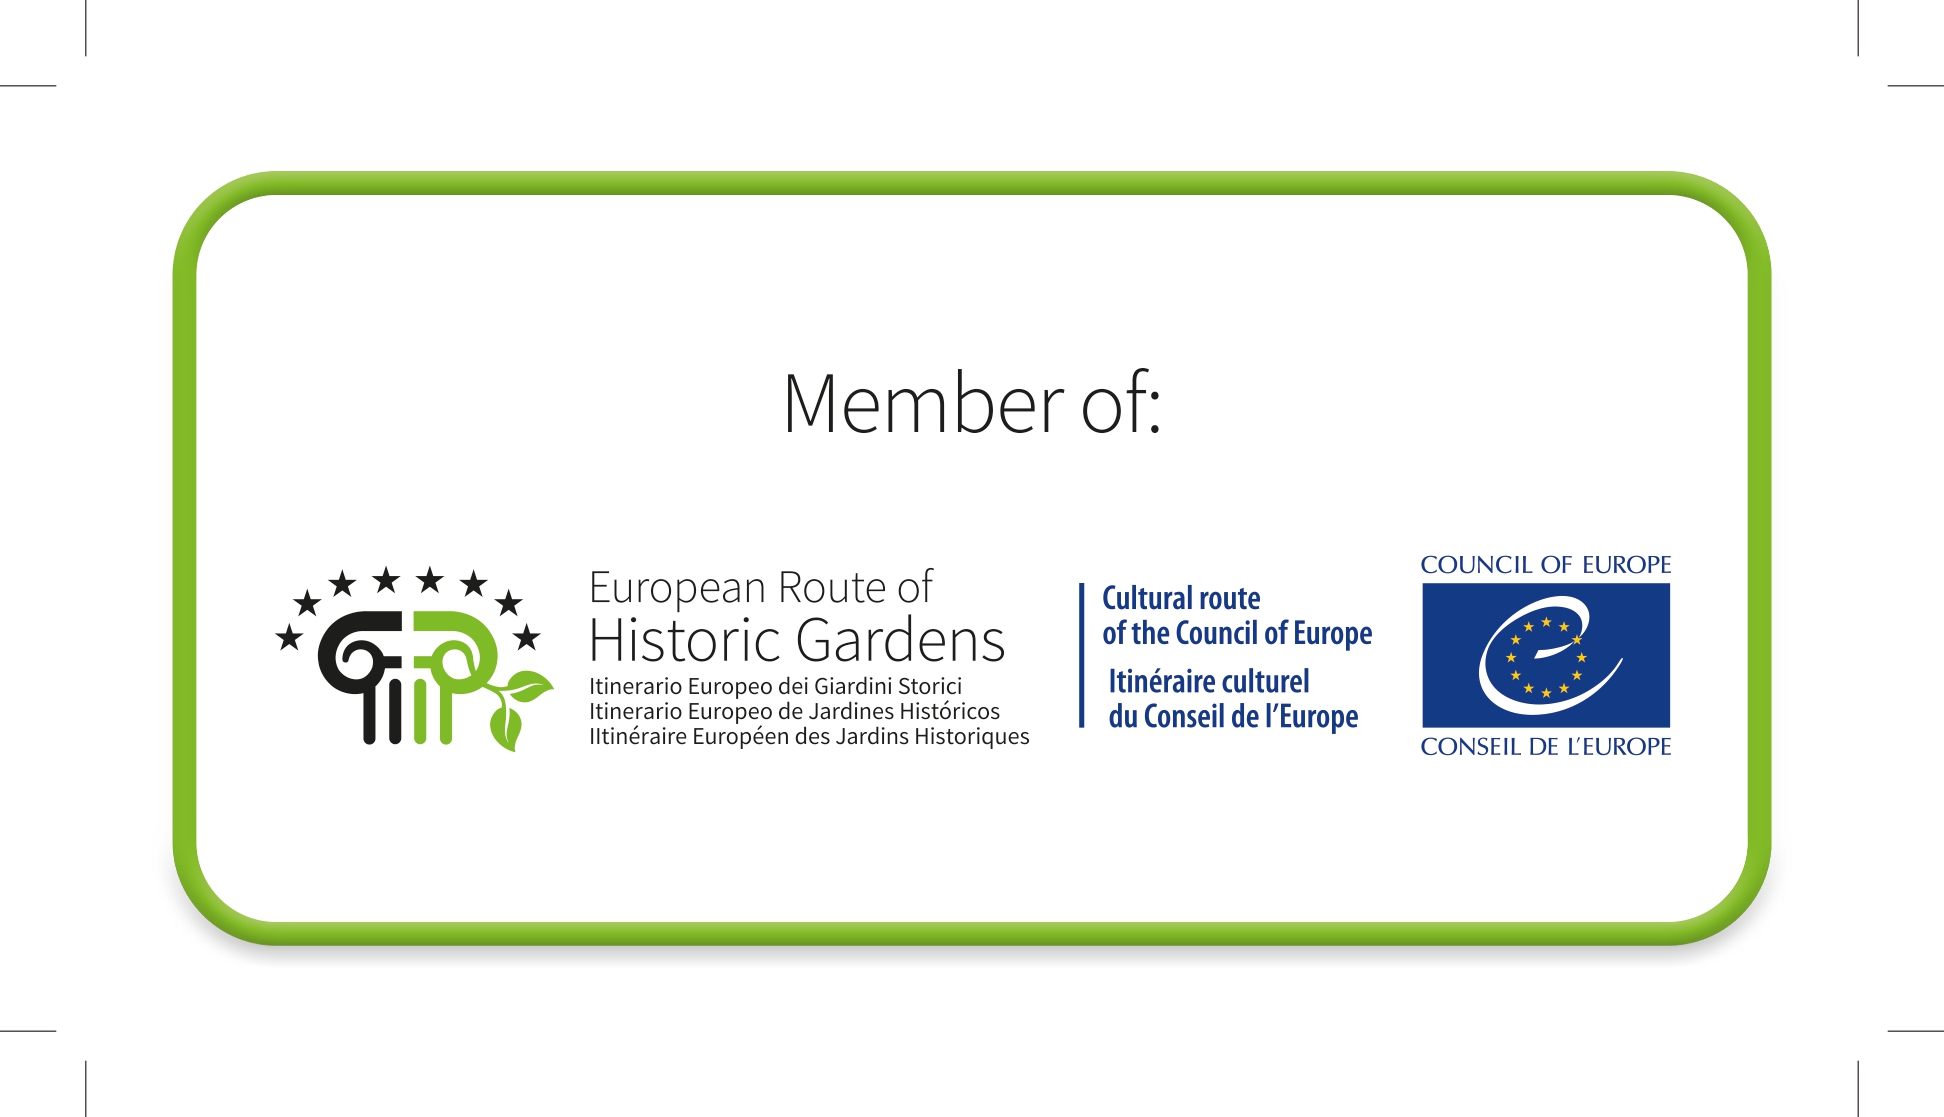 Acreditación de Ruta Europea de Jardines Históricos como itinerario europeo del Consejo de Europa.